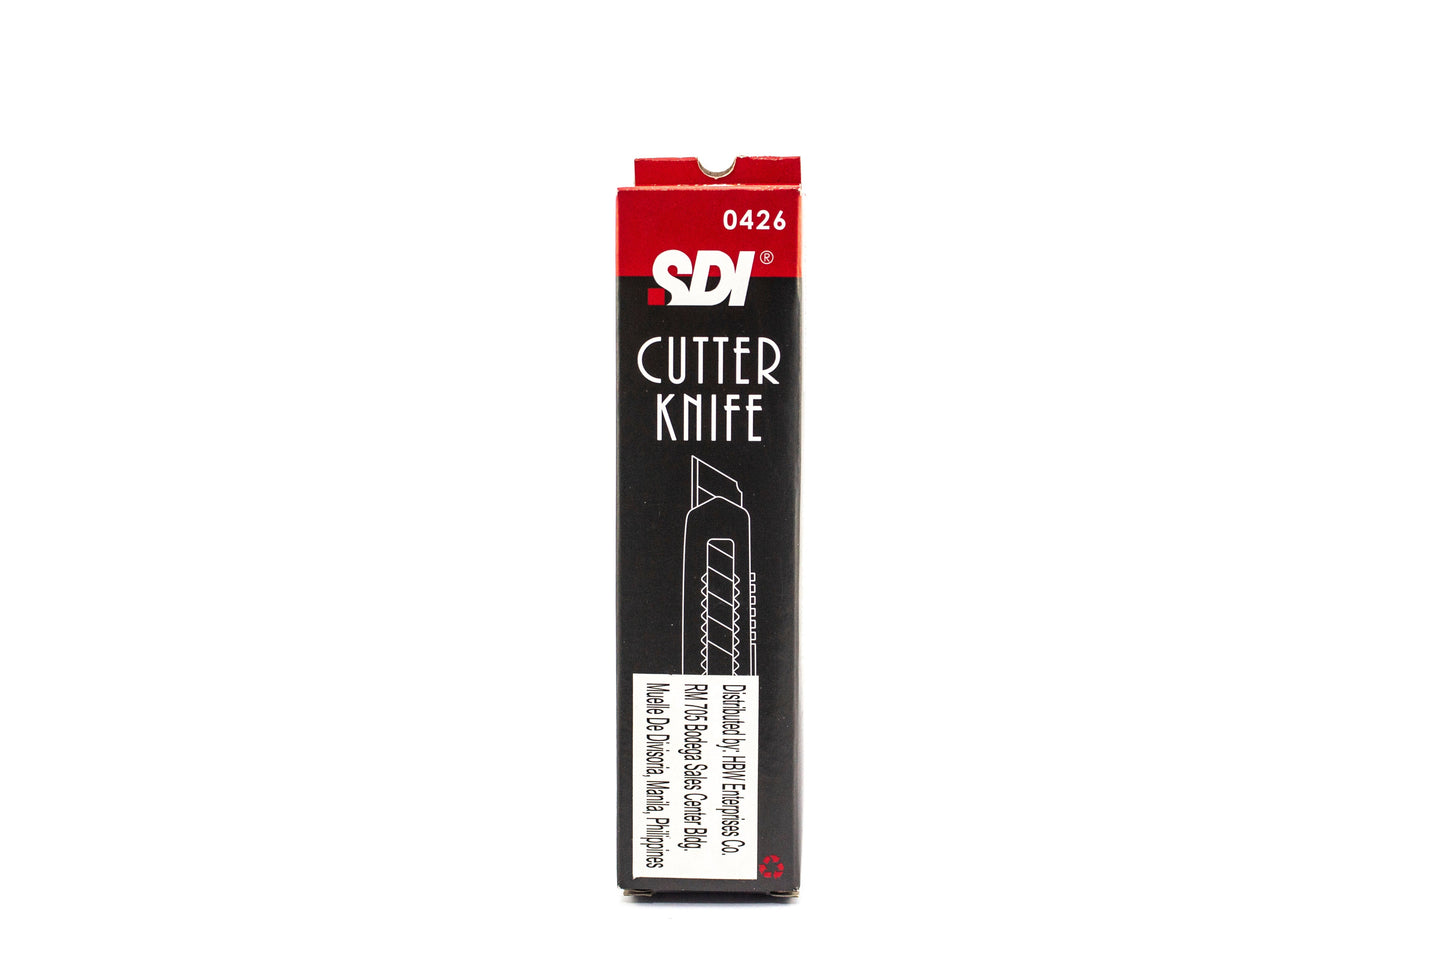 SDI Cutter Knife no. 0426